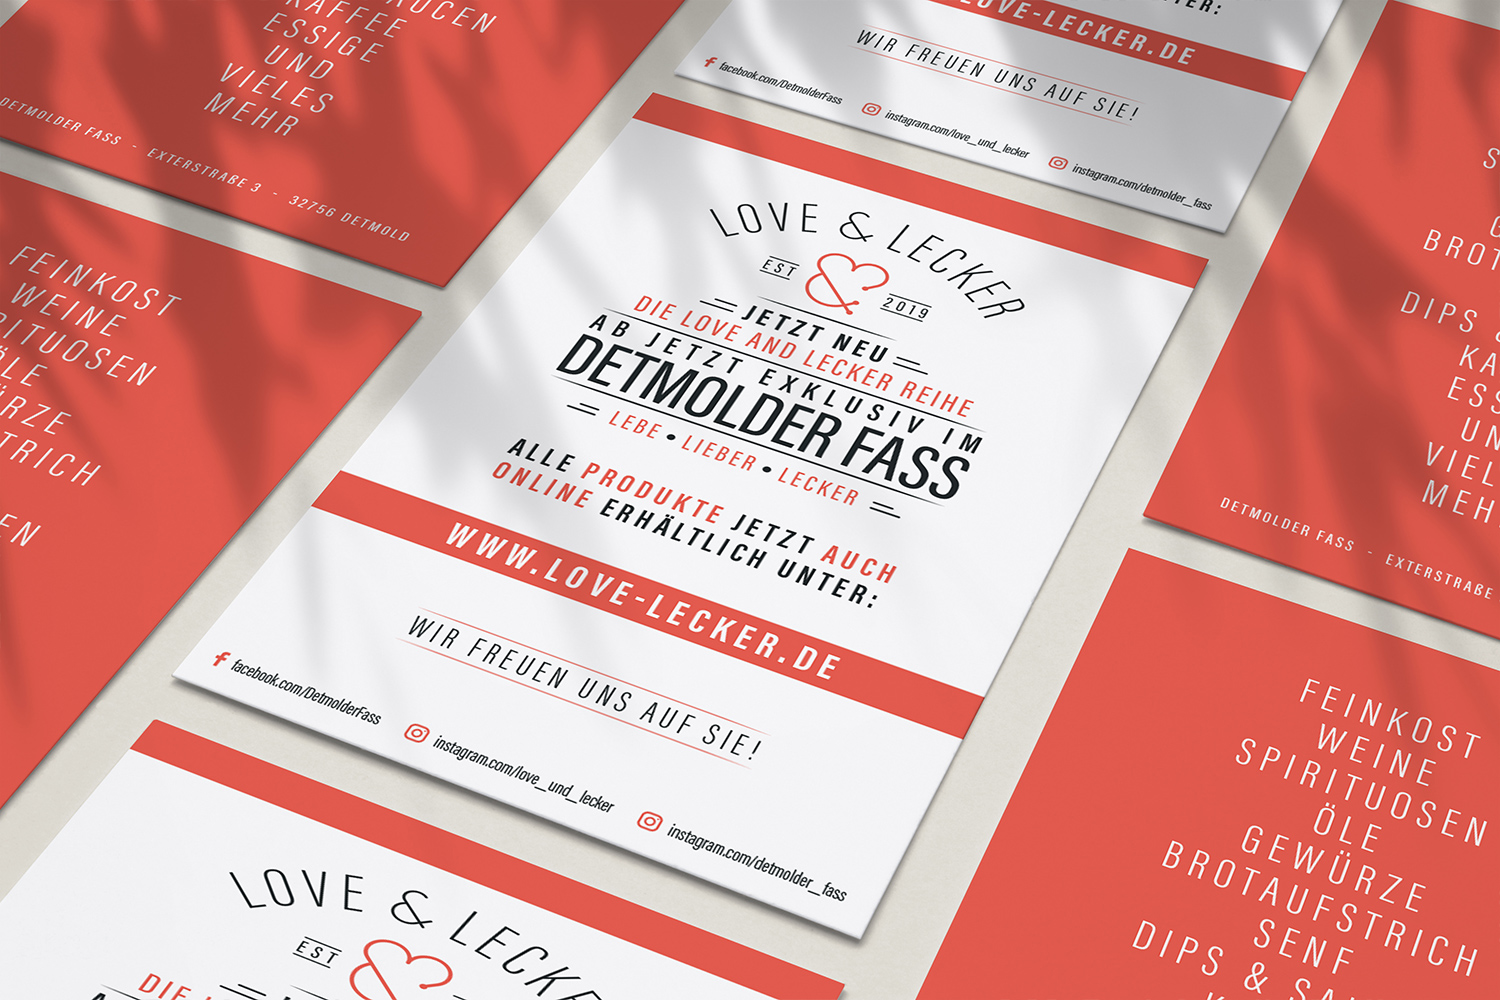 Label Logo print love and lecker detmolder fass